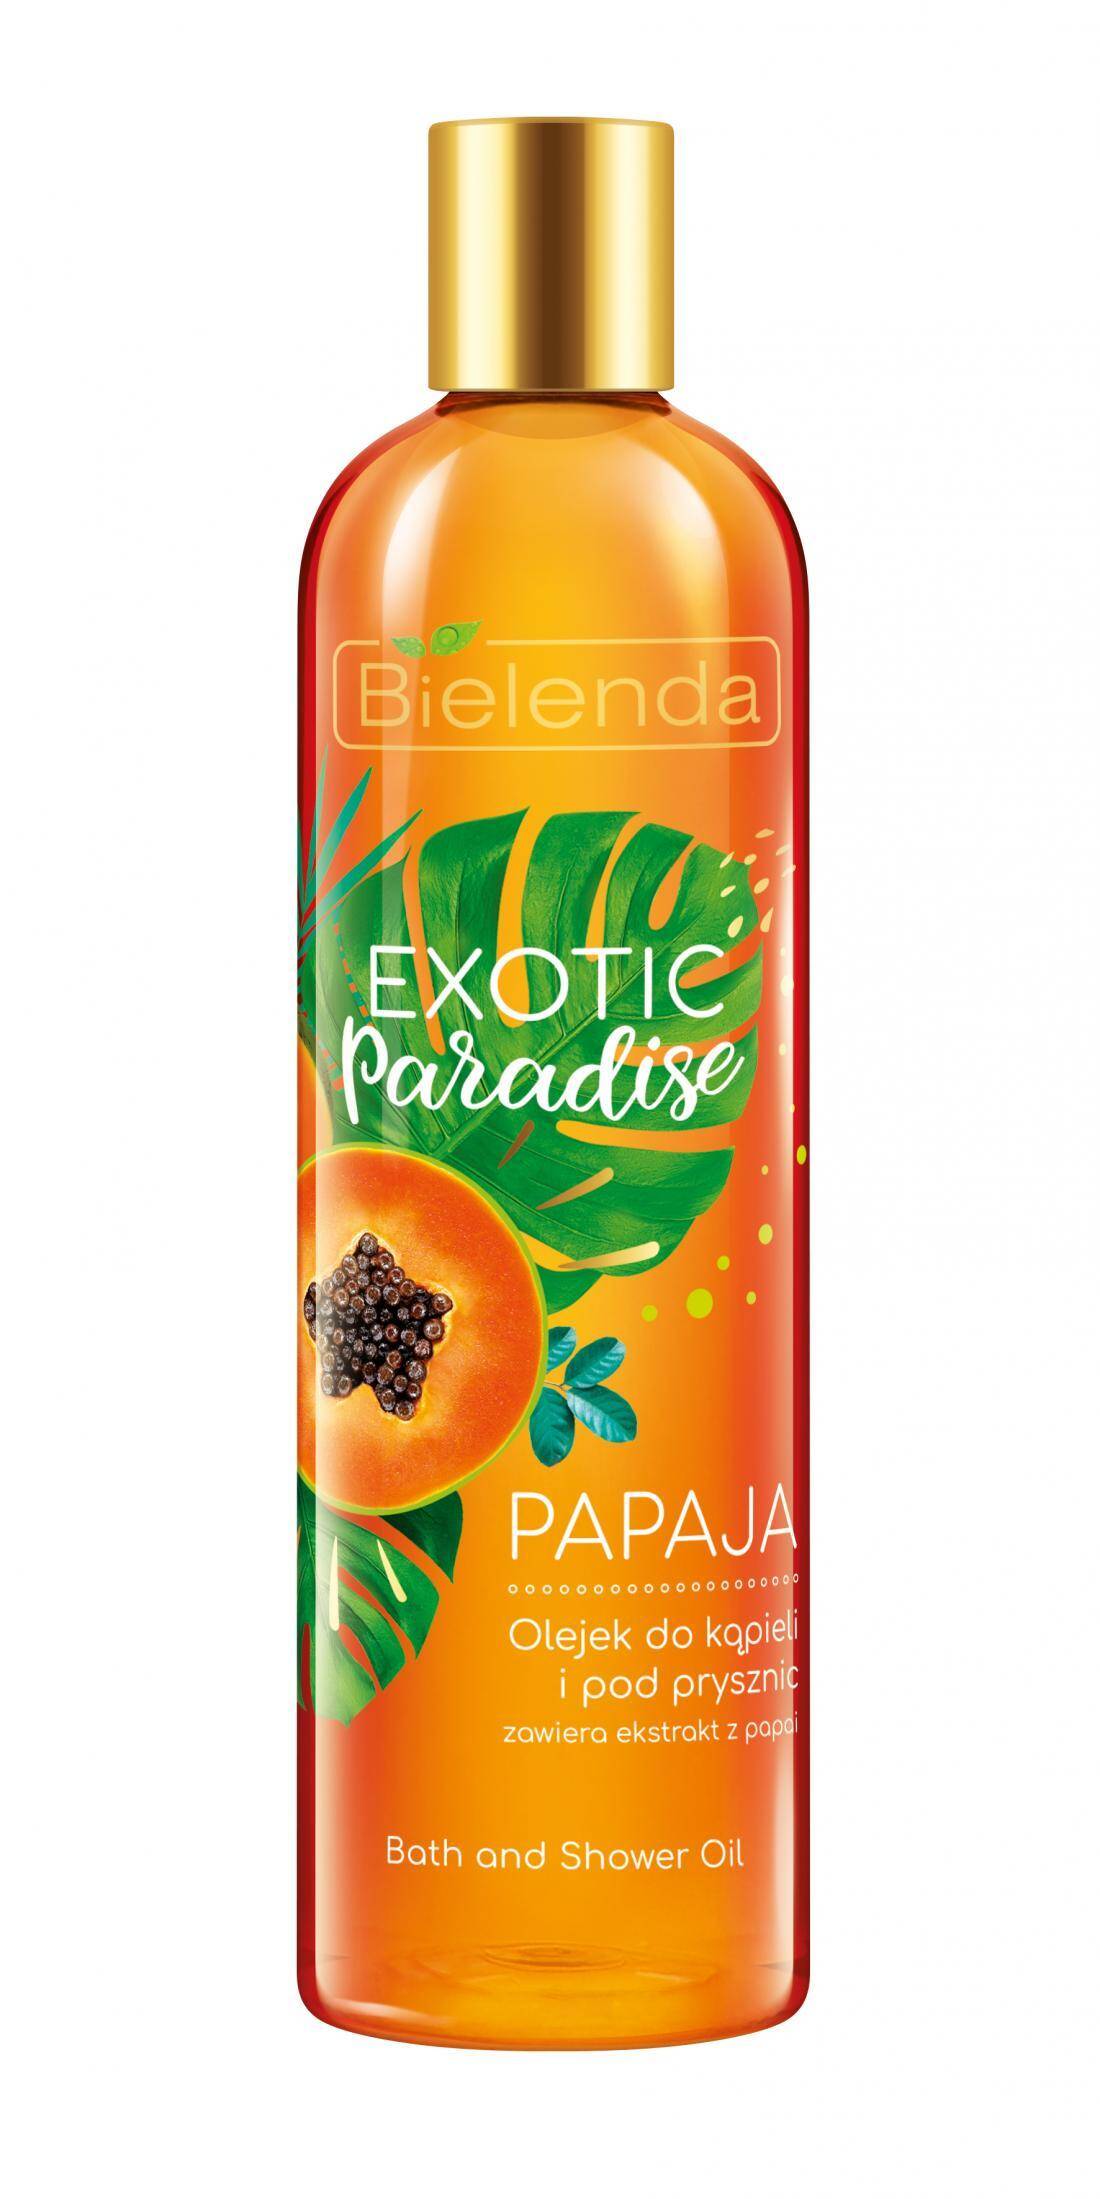 Bielenda Exotic Paradise olejek do kąpieli Papaja 400ml